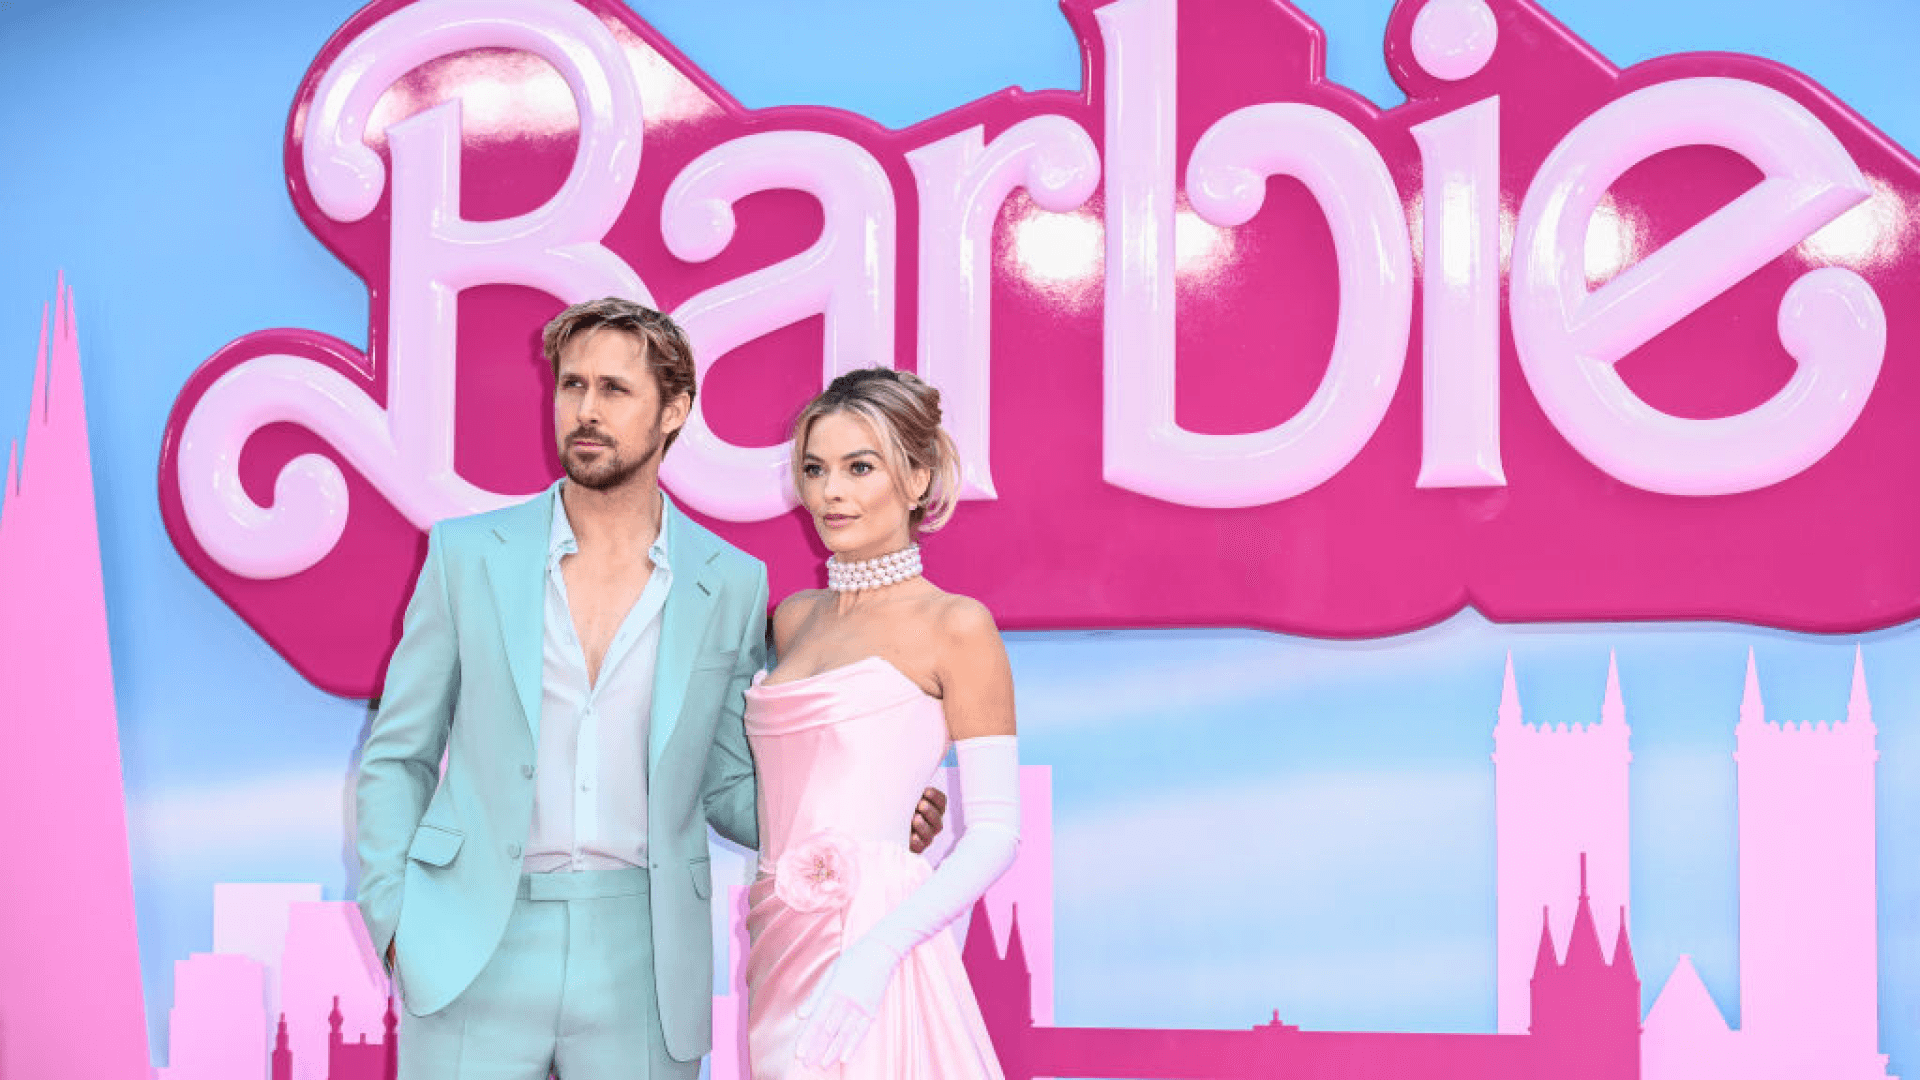 Barbie film starring margot robbie and ryan gosling